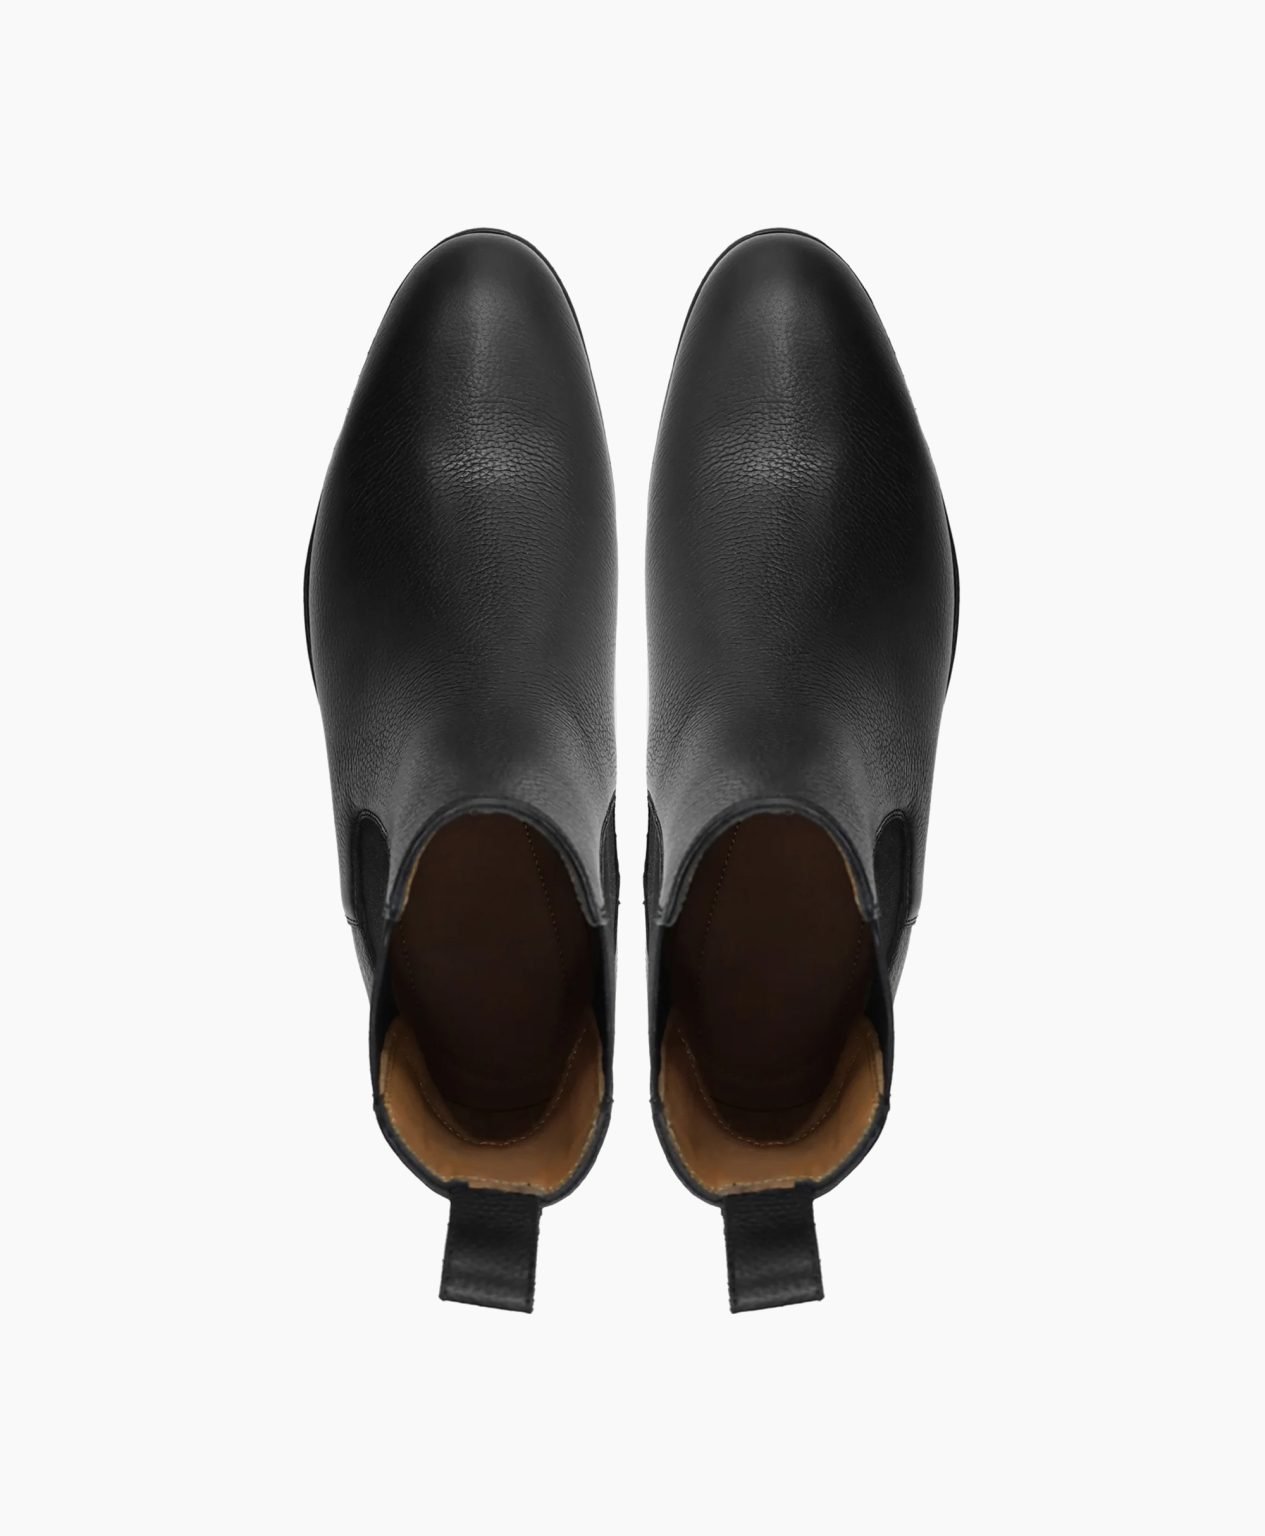 carlisle-chelsea-black-leather -boot-image202